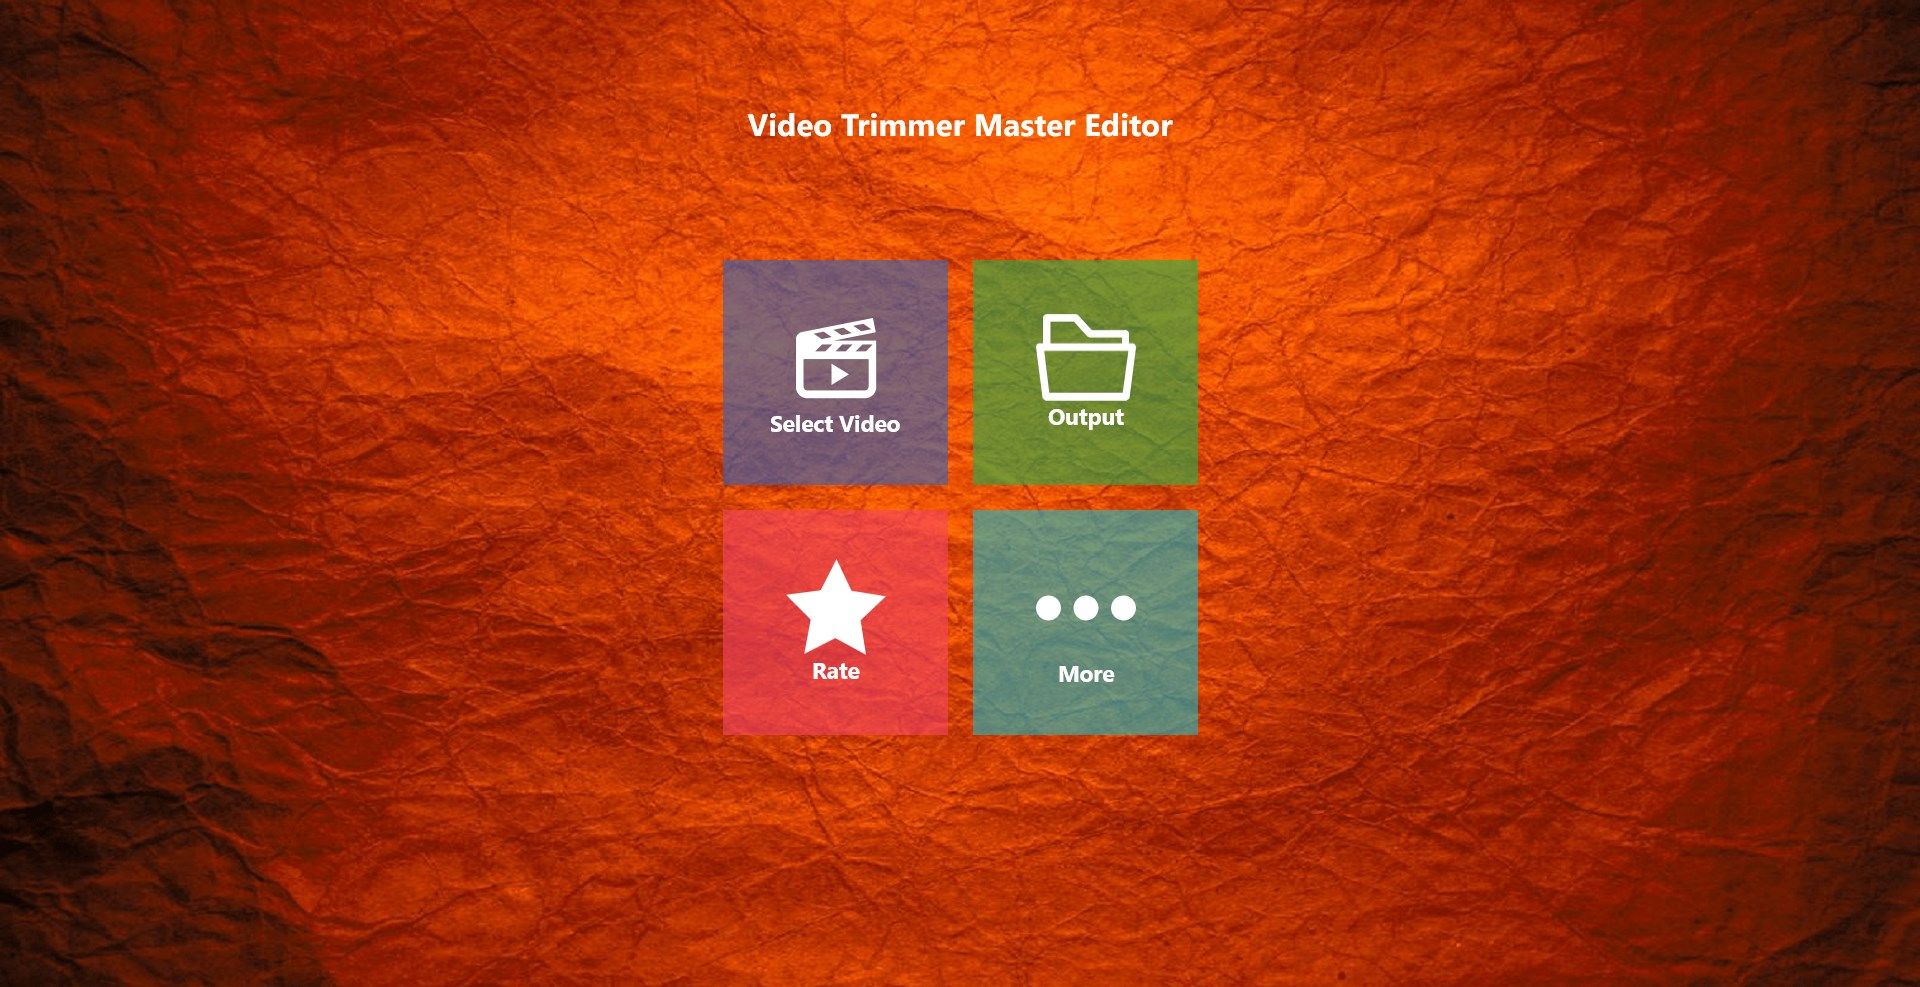 Video Trimmer Master Editor